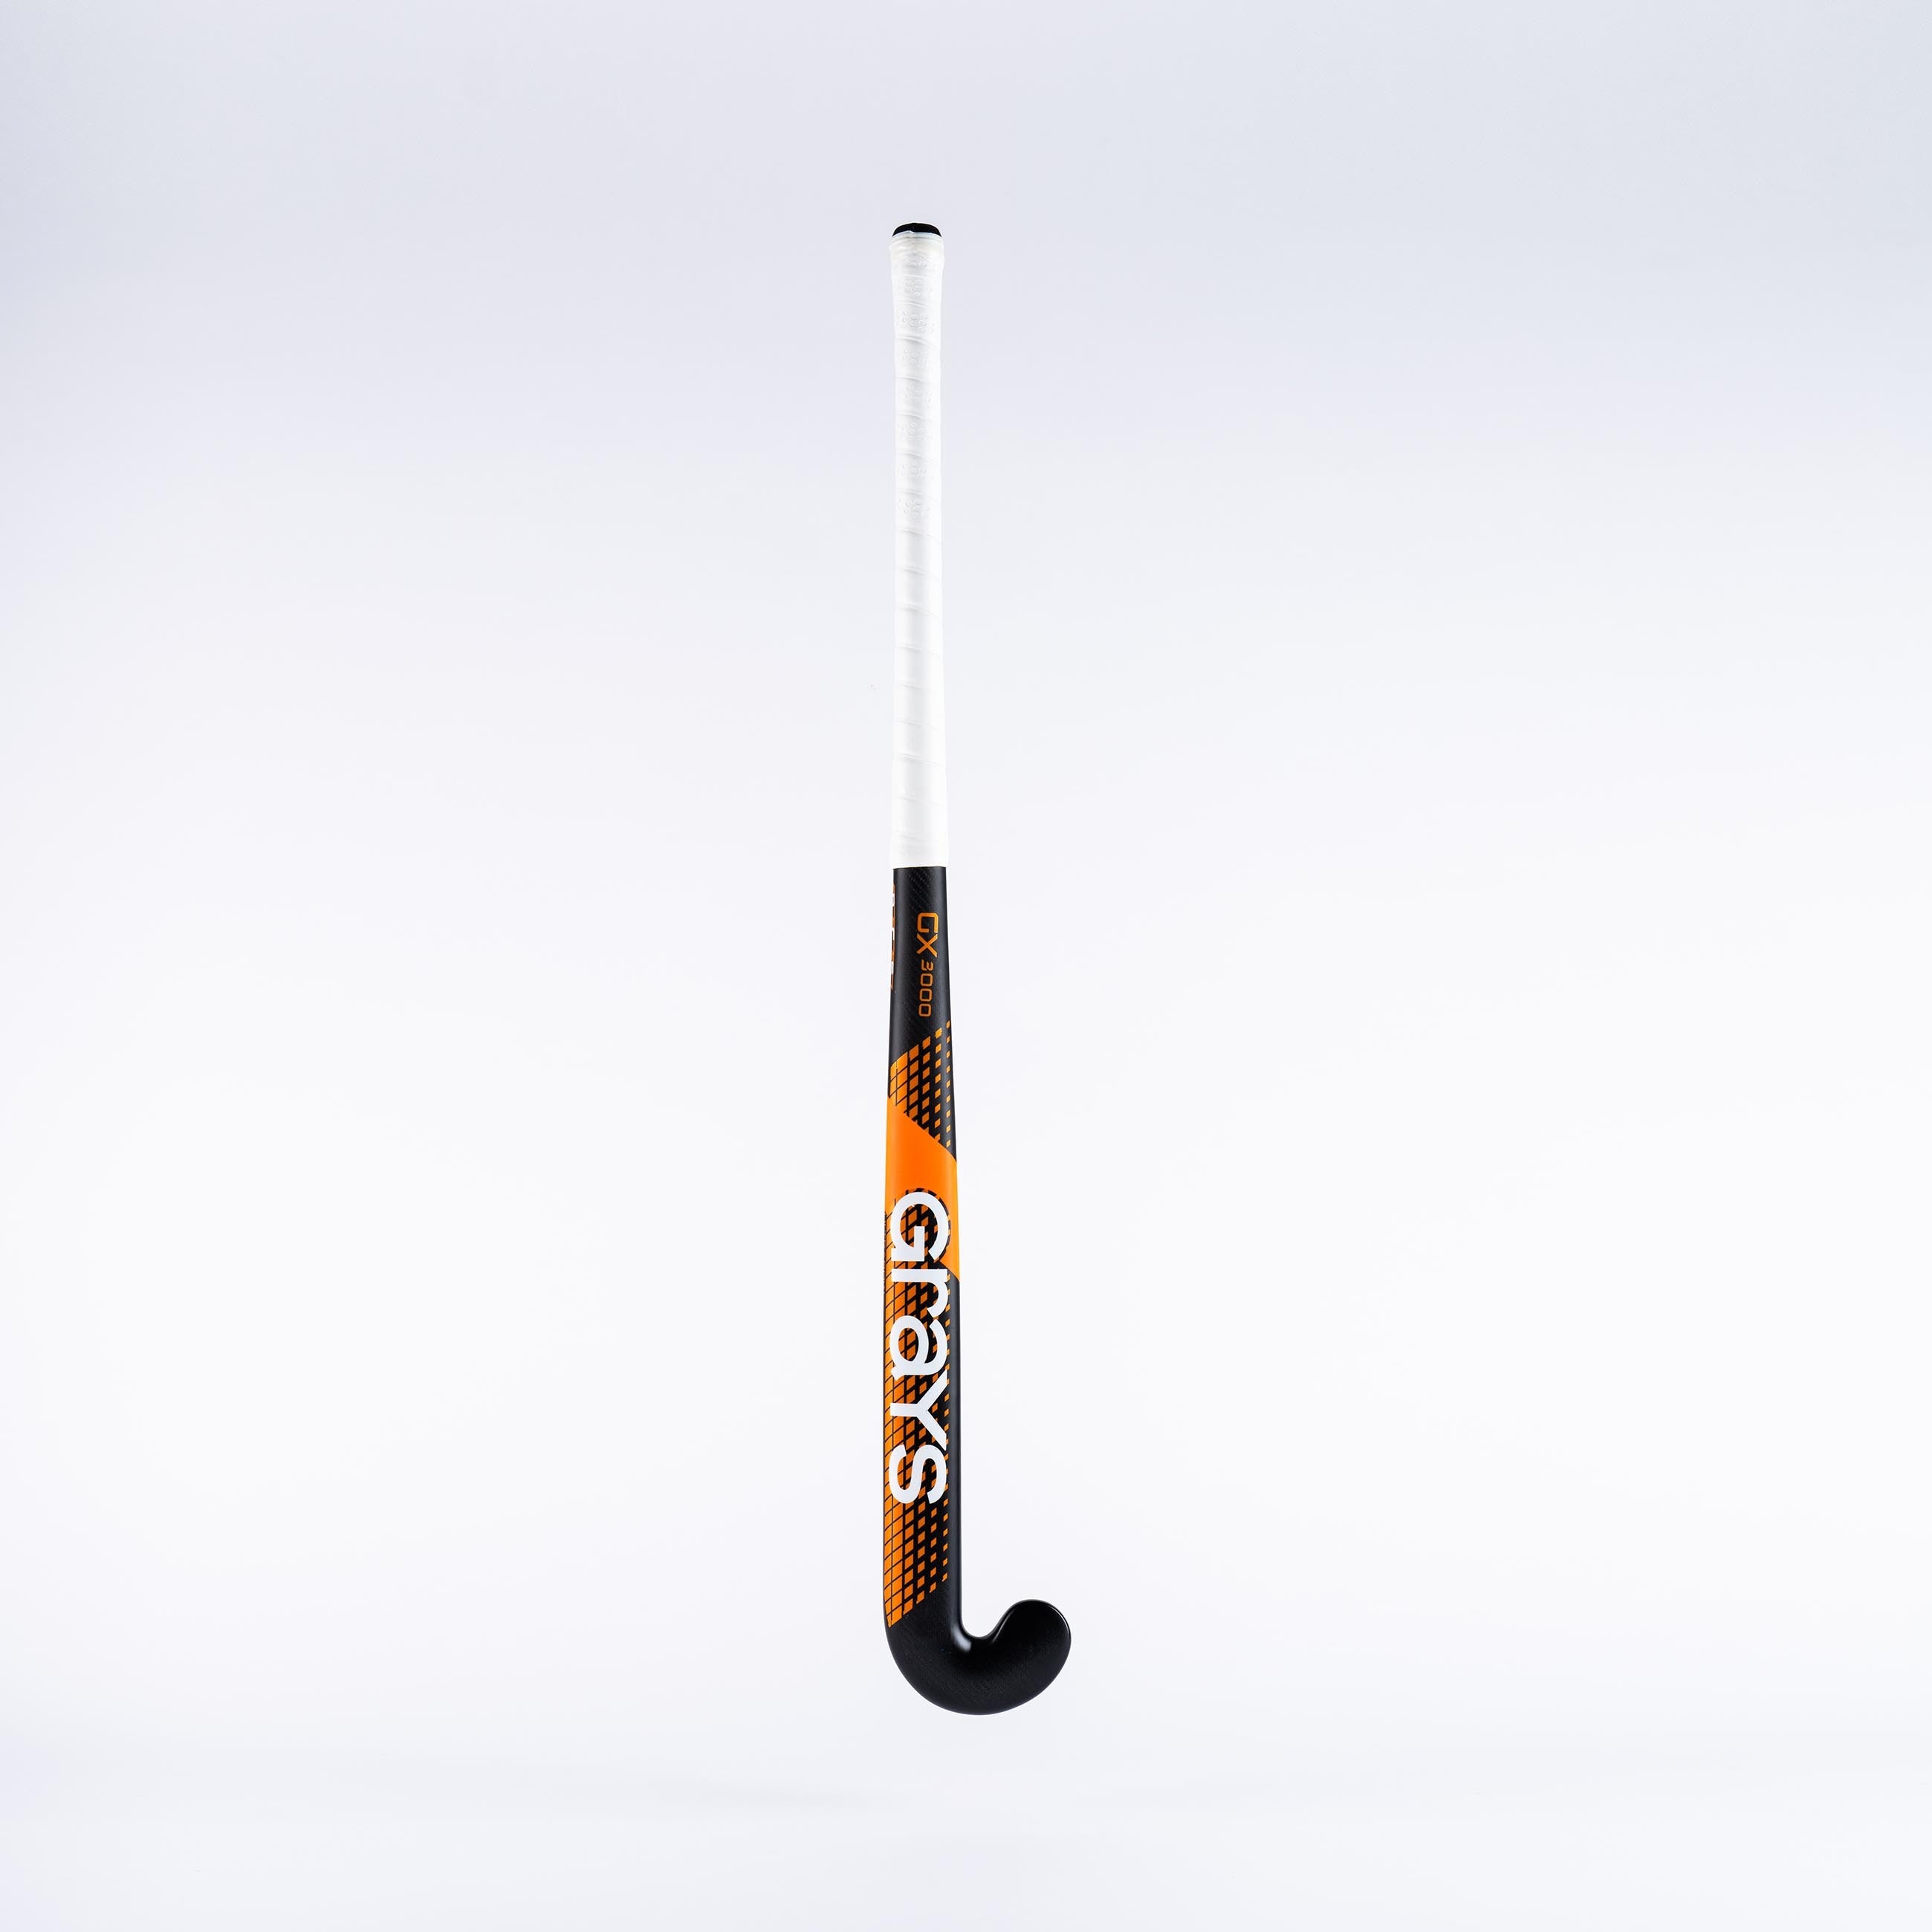 HACB23Composite Sticks GX3000 UB Micro 50  Black & Orange, 3 Back